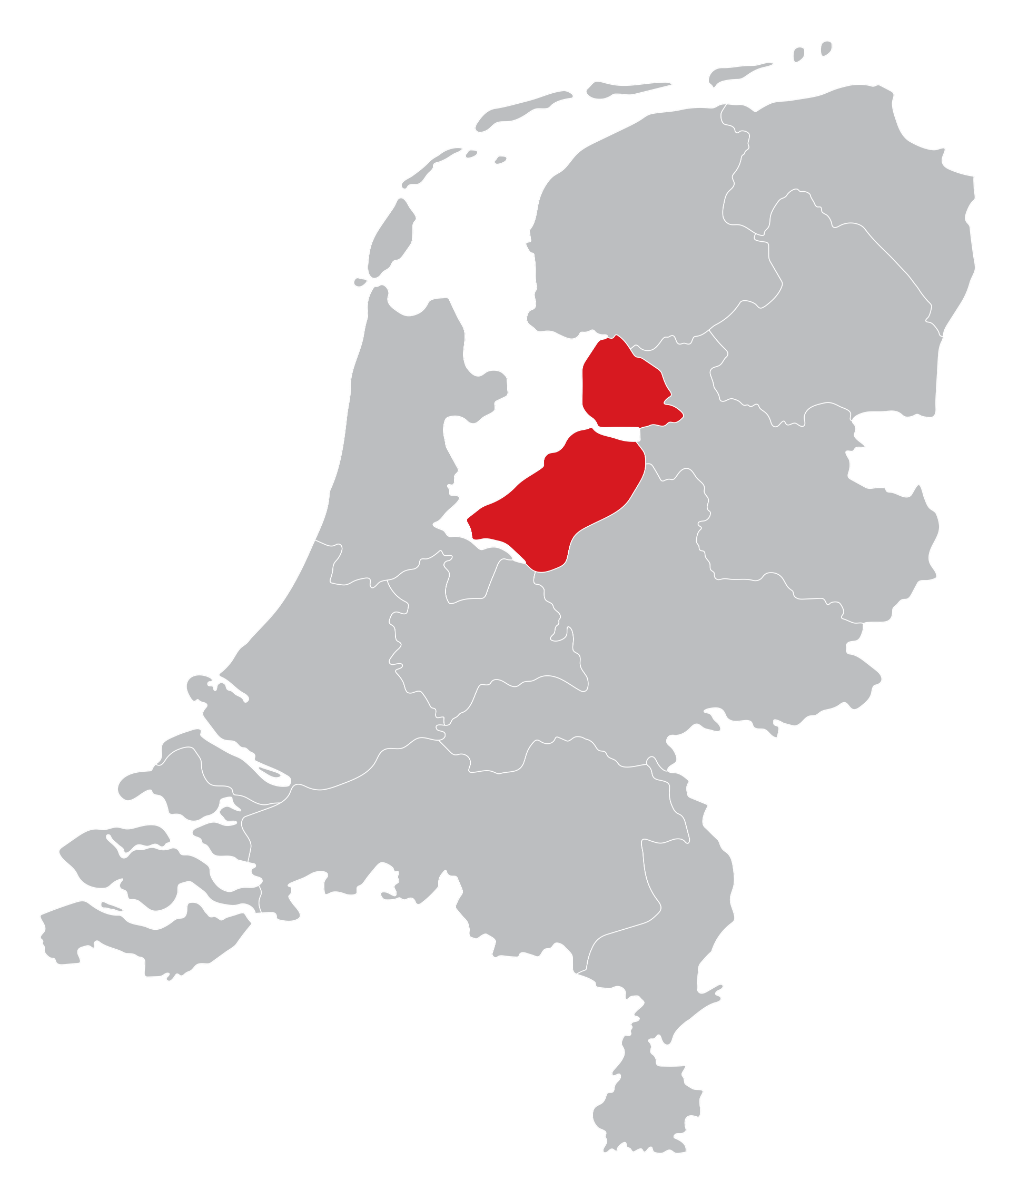 Dealers kaart in de provincie Flevoland, Almere, Emmeloord of Lelystad